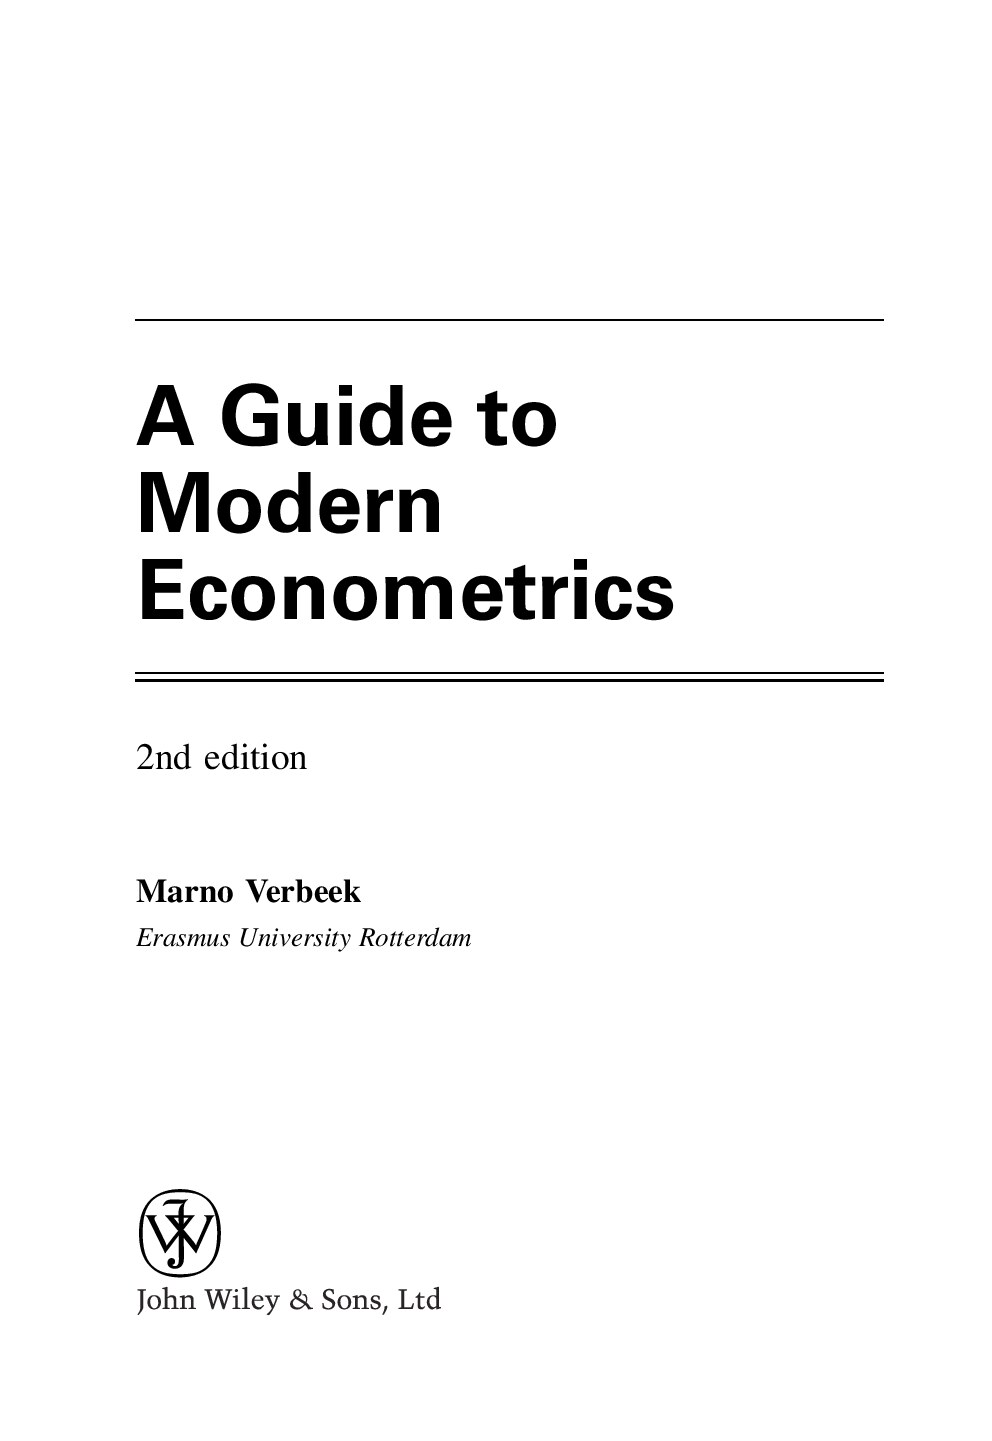 A guide to modern econometrics_Marno Verbeek_2004